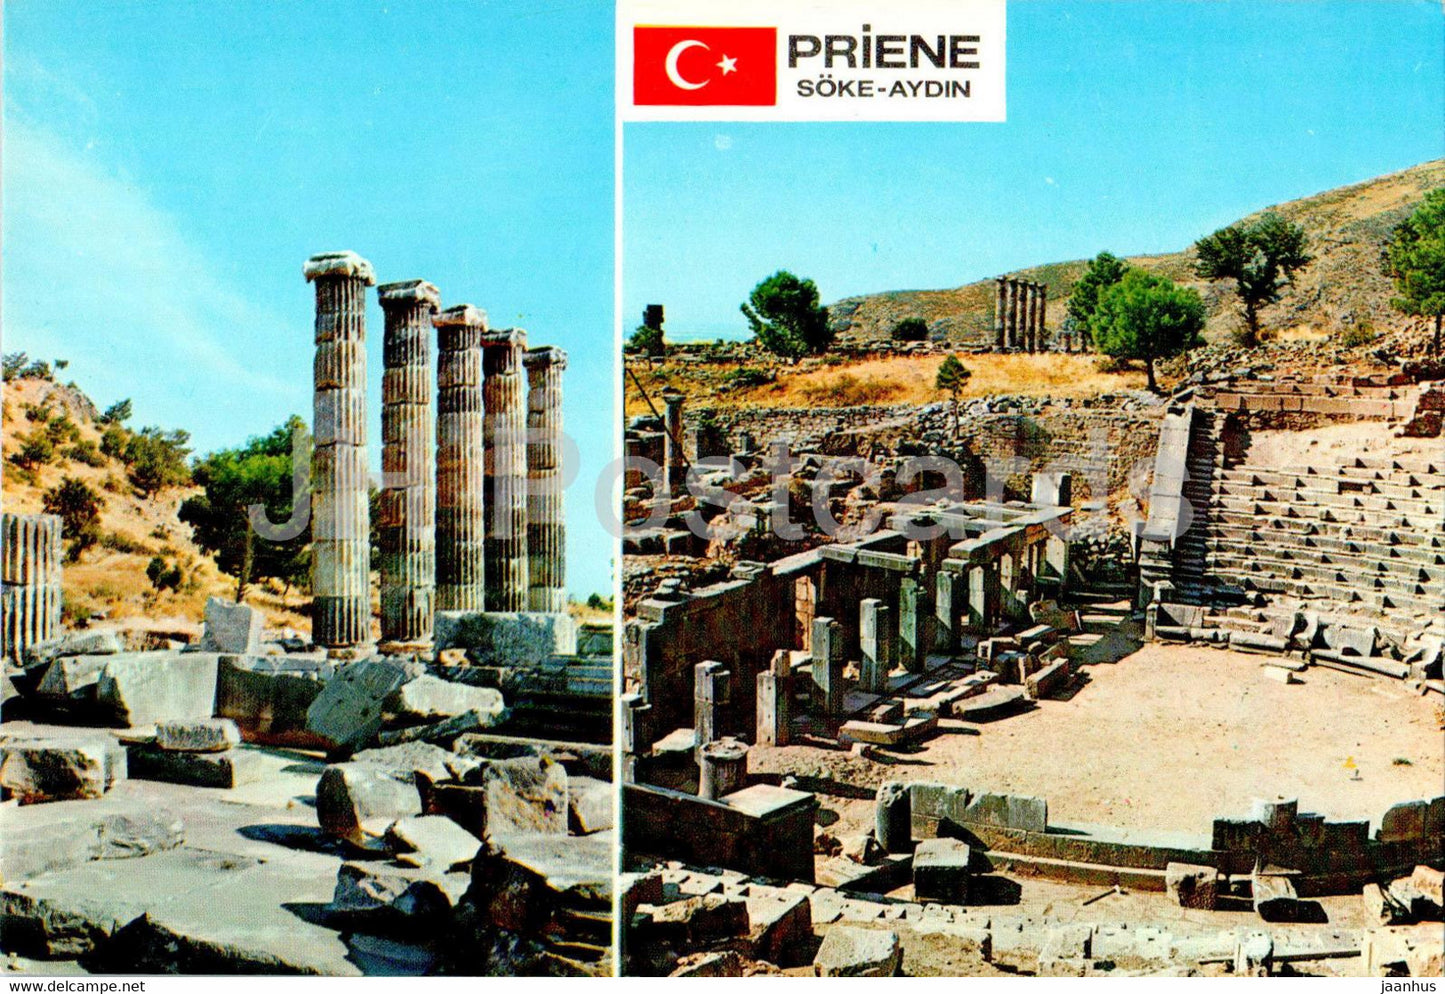 Priene - Soke - Tapinak ve Tiyatro - theatre - ancient world - 757 - Turkey - unused - JH Postcards